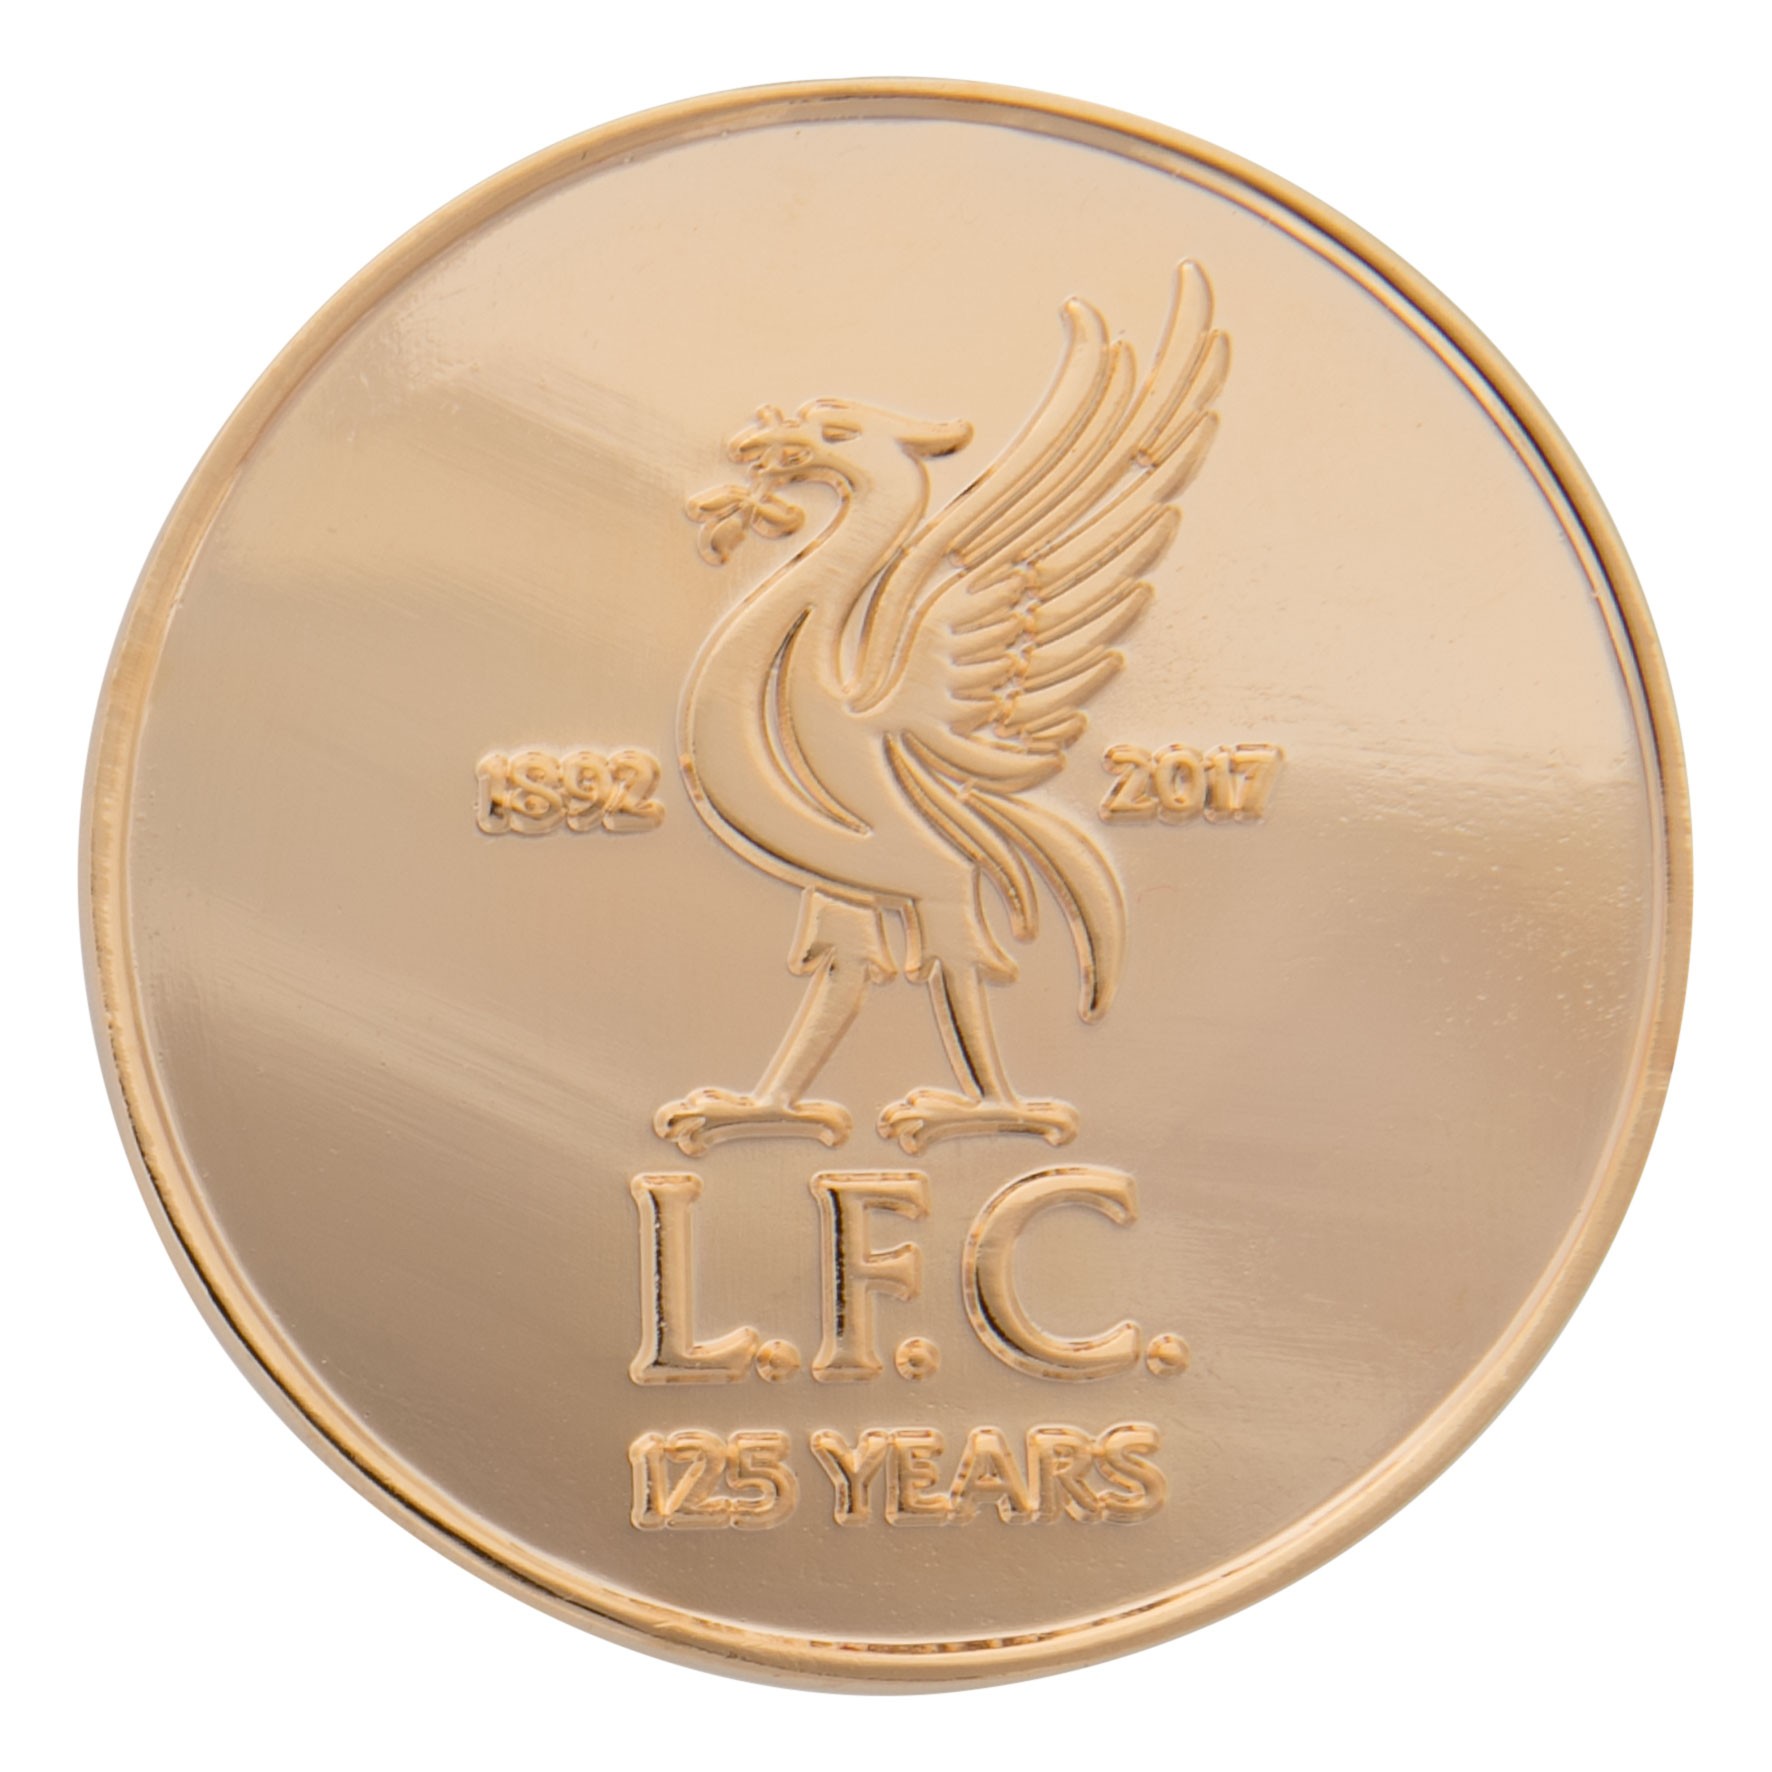 LFC 125 Coin